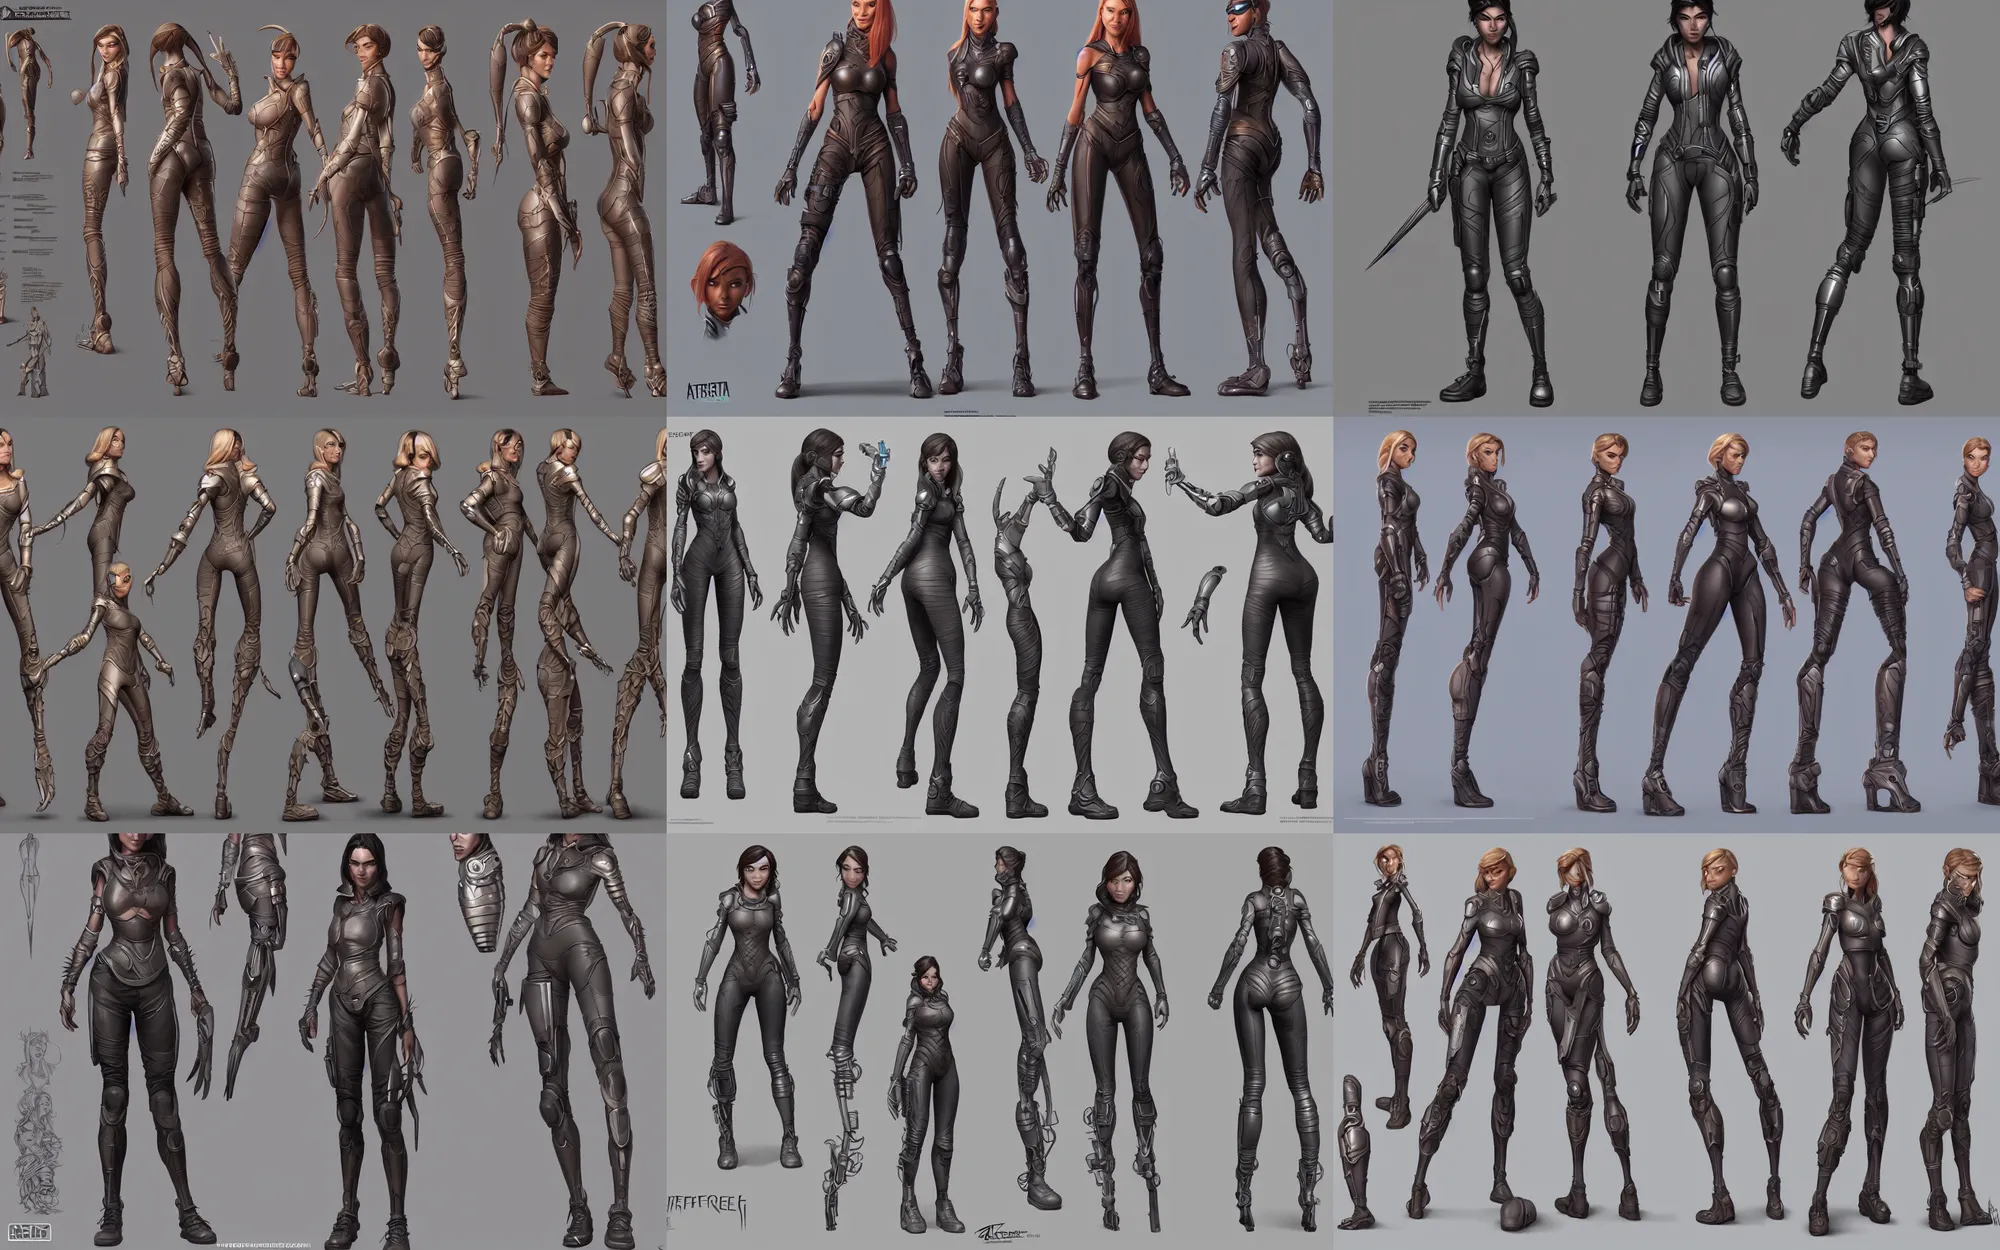 Prompt: weta disney pixar movie character sheet, female badass cyberpunk, by artgerm and charles freger, character sheet, unreal engine, metahumans